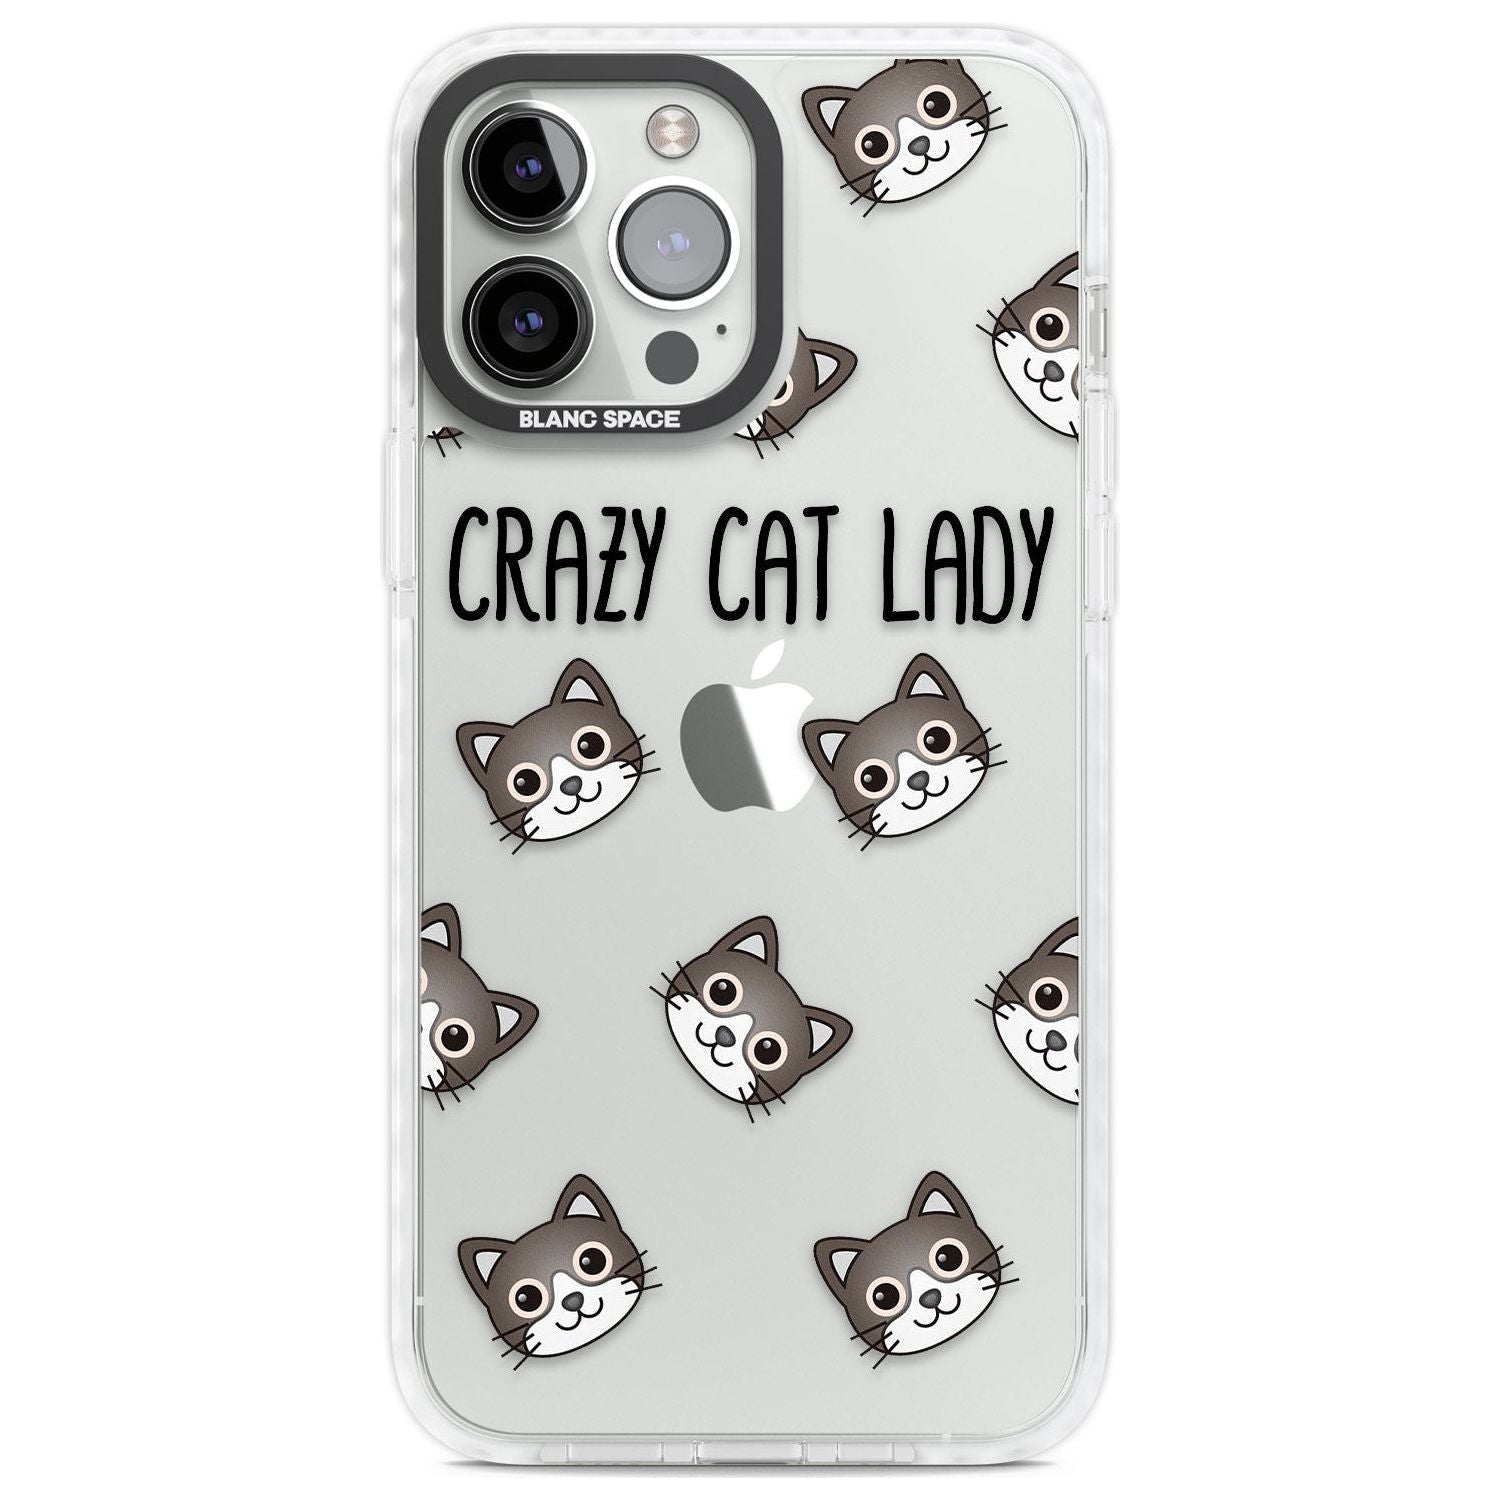 Crazy Cat Lady Phone Case iPhone 13 Pro Max / Impact Case,iPhone 14 Pro Max / Impact Case Blanc Space